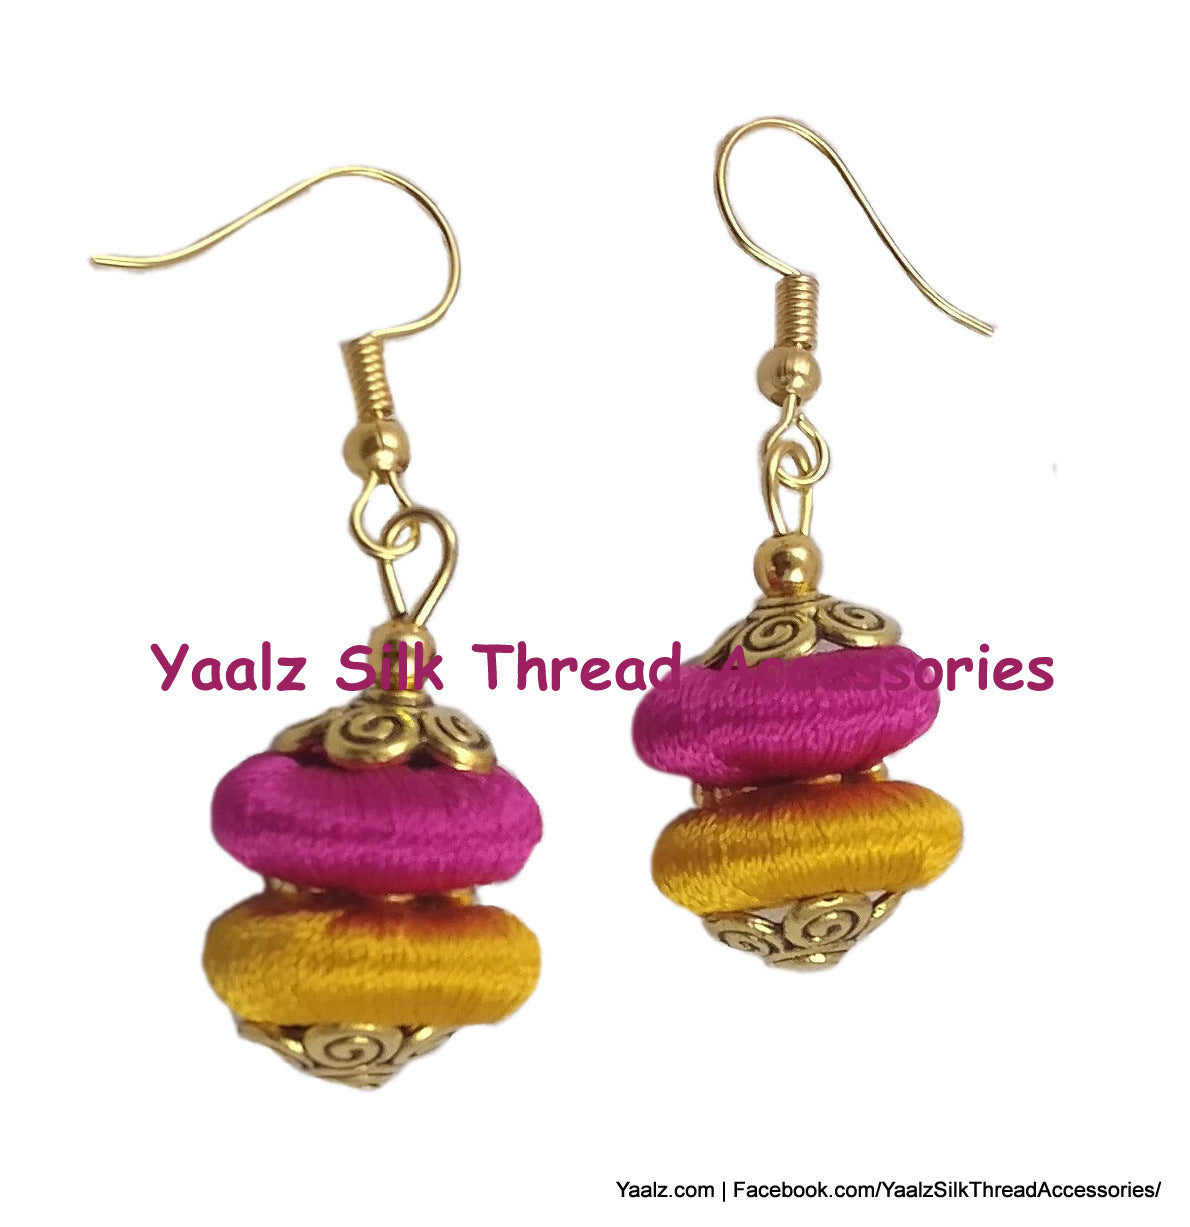 Yaalz Silk Thread Ring Earrings in Assorted Colors